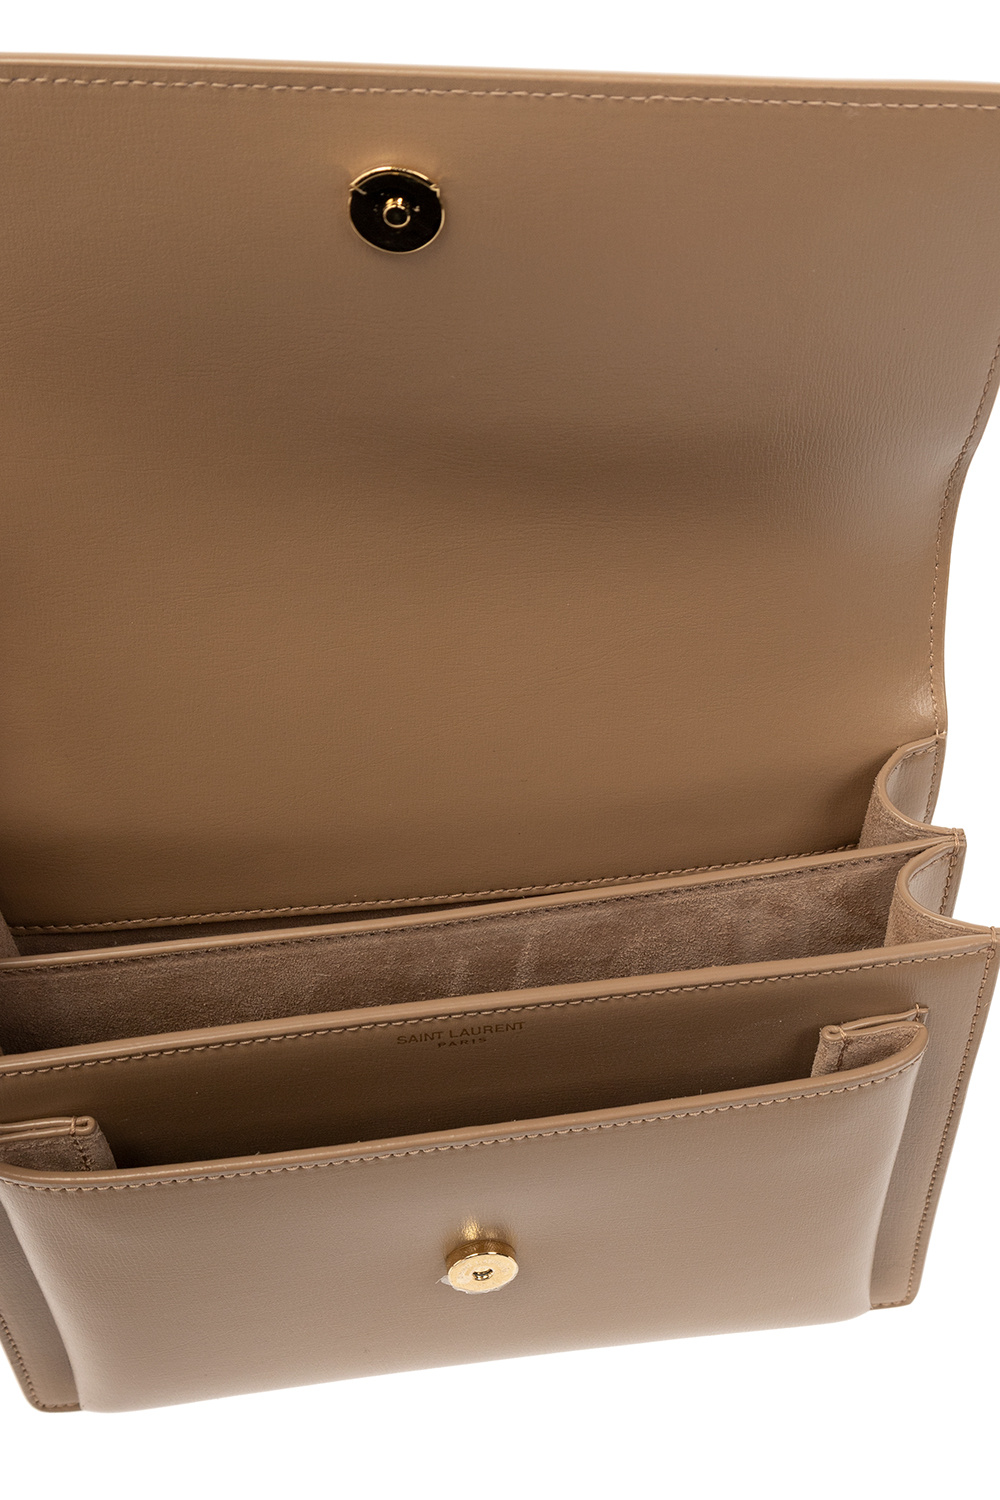 Yves Saint Laurent Monogram Sunset Medium Leather Shoulder Bag